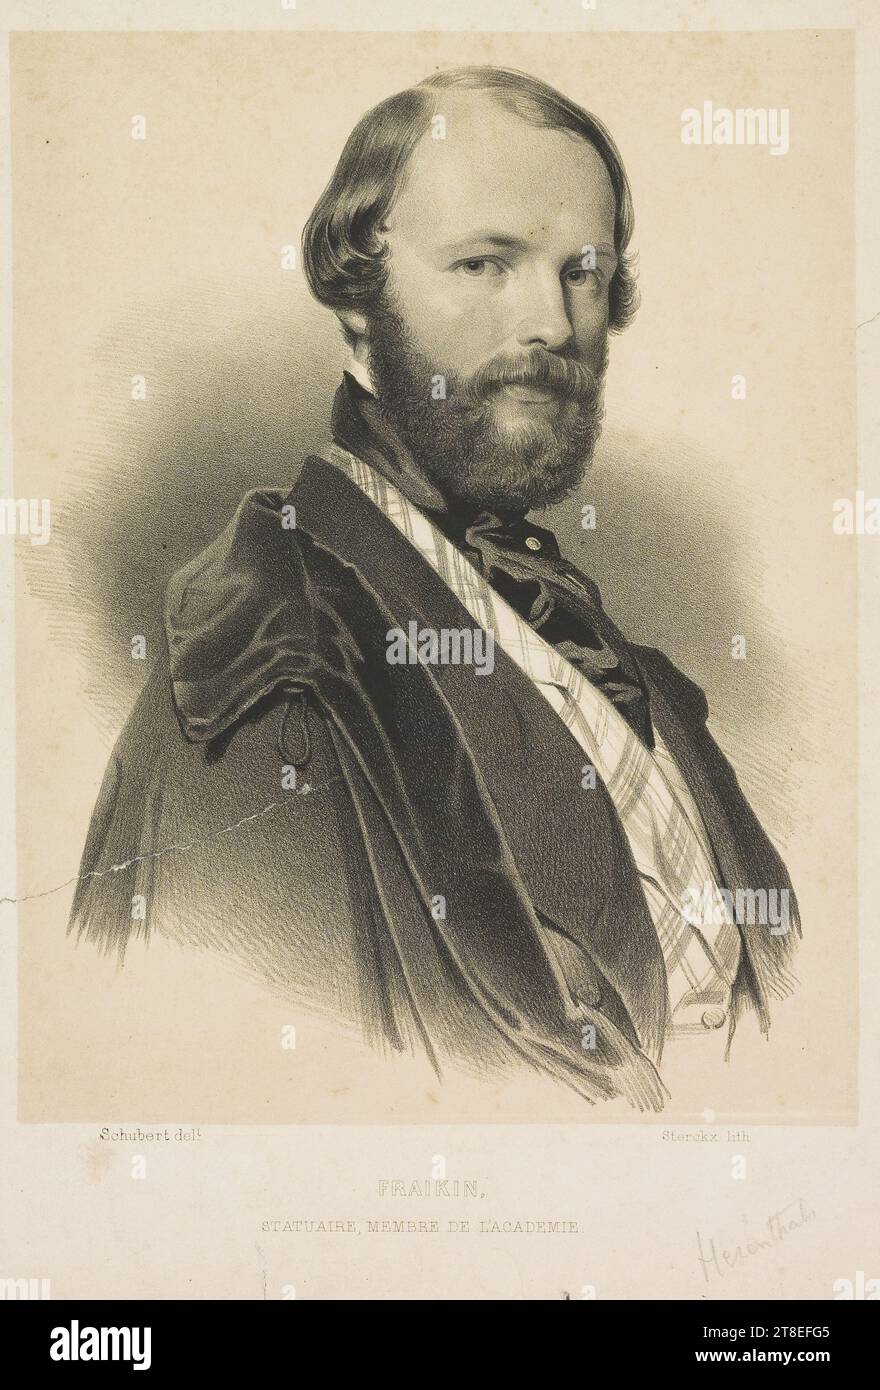 Schubert delt. Sterckx lith. FRAIKIN, STATUARY, MEMBER OF THE ACADEMY Stock Photo